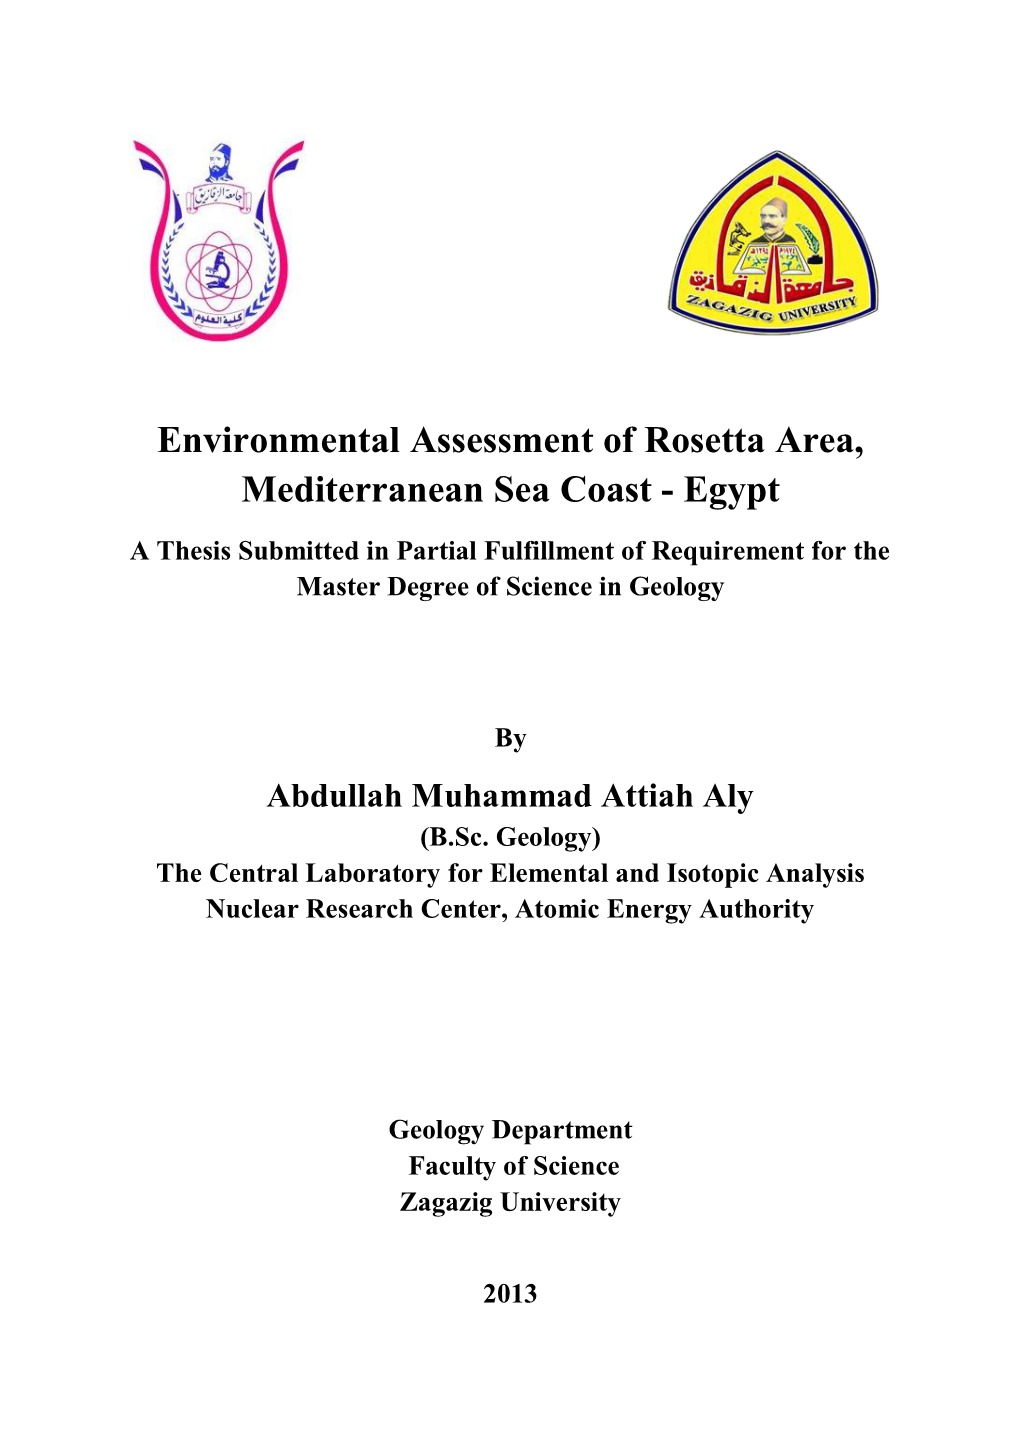 Environmental Assessment of Rosetta Area, Mediterranean Sea Coast - Egypt